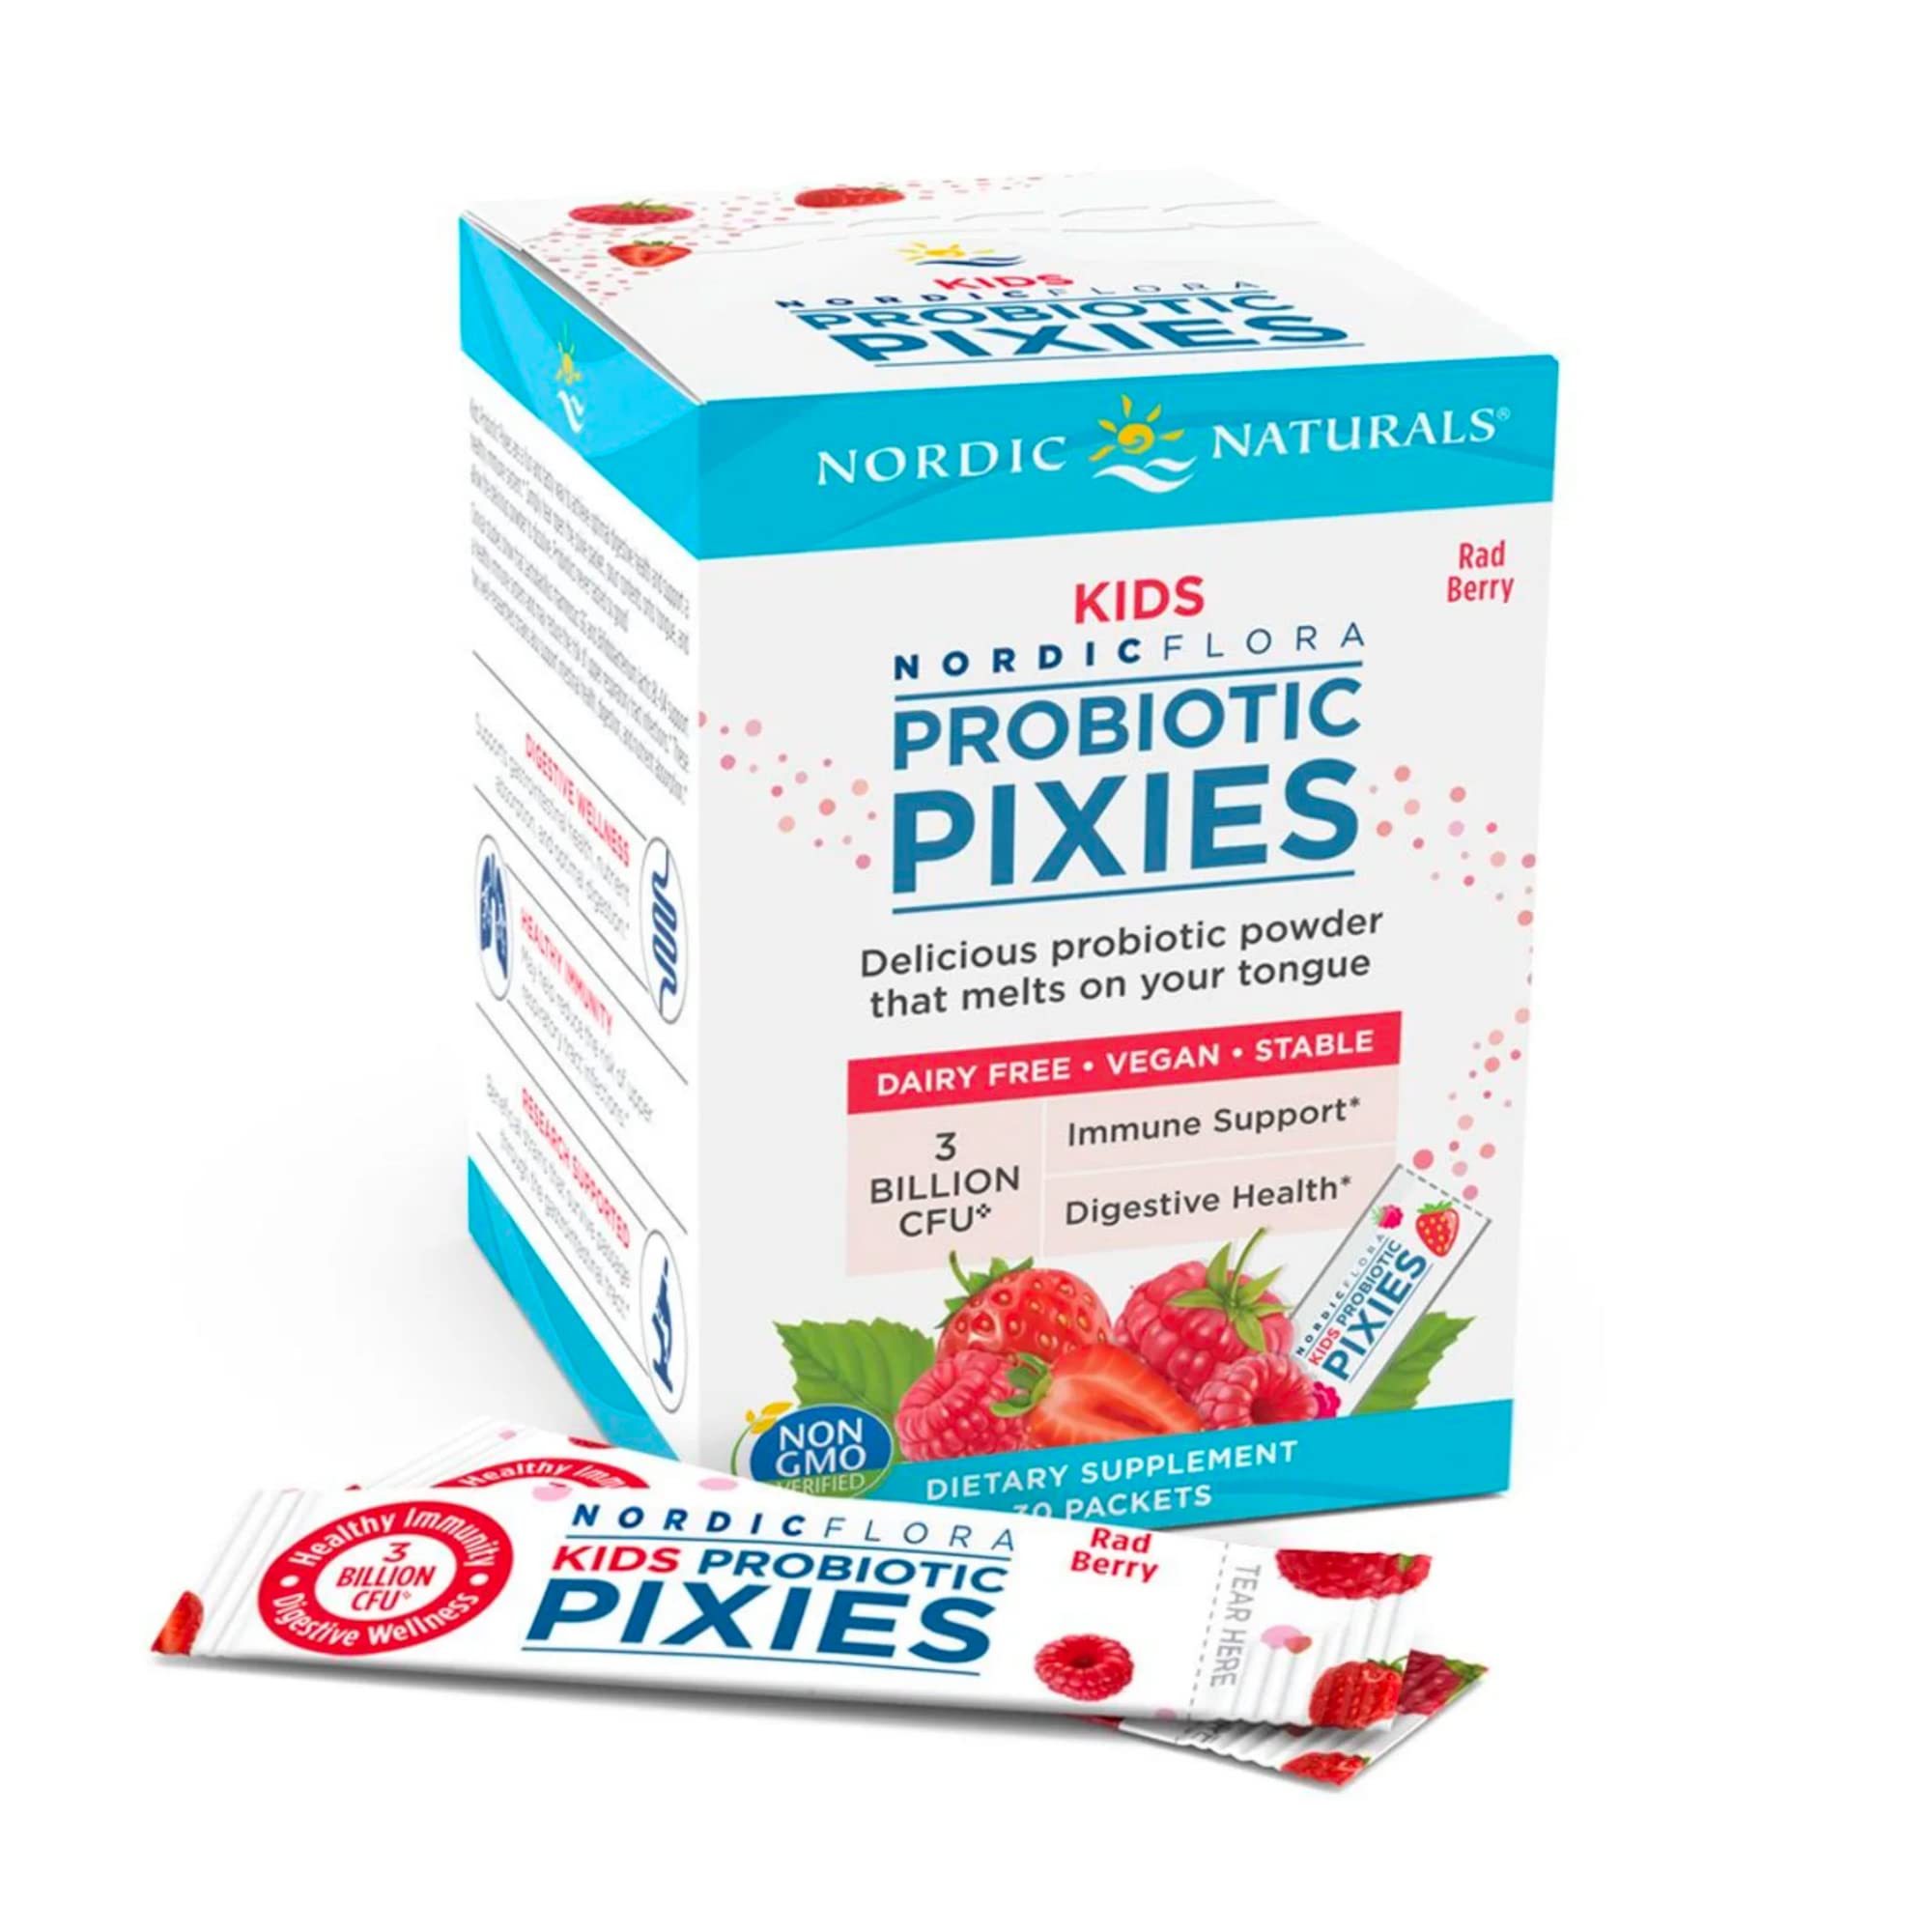 Nordic Naturals Kids Probiotic Pixies - Probiotic Powder for Children's Digestive Health, Sugar-Free, Vegetarian, Vegan - 30 Count, Berry